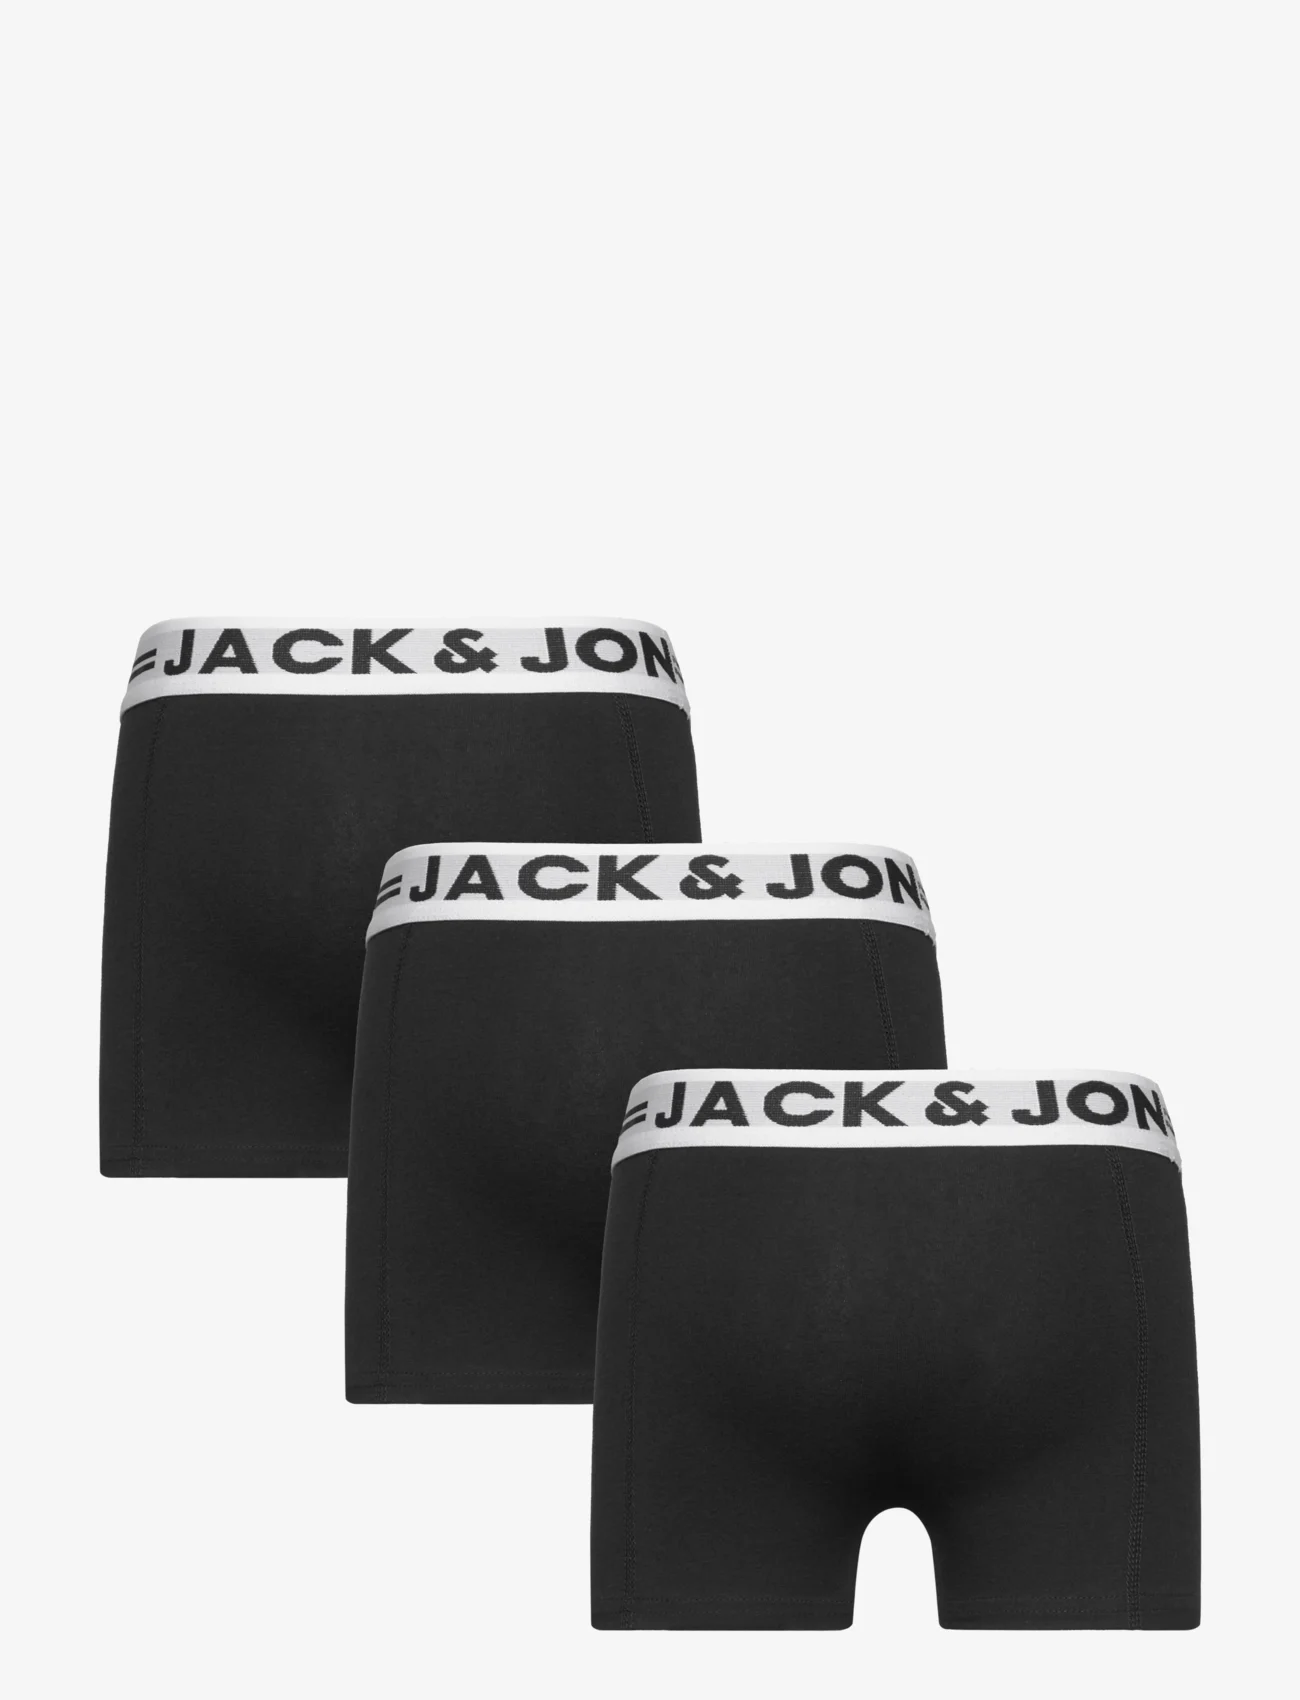 Jack & Jones - SENSE TRUNKS 3-PACK NOOS MNI - underbukser - black - 1